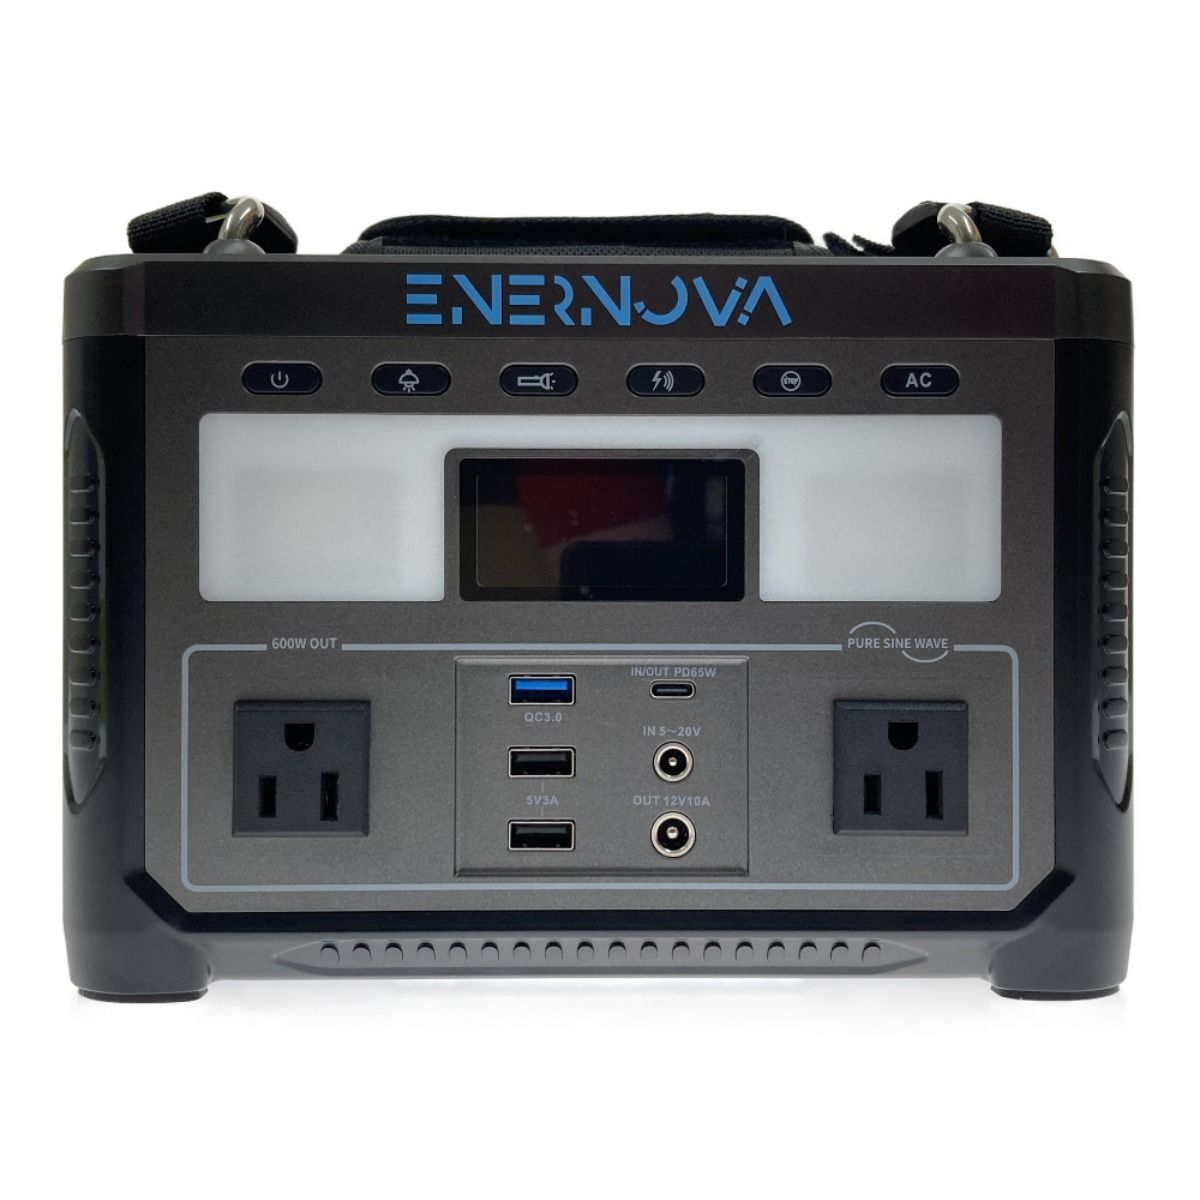 Enernova ポータブル電源＋ソーラーパネルセット 288Wh/AC(定格600W 